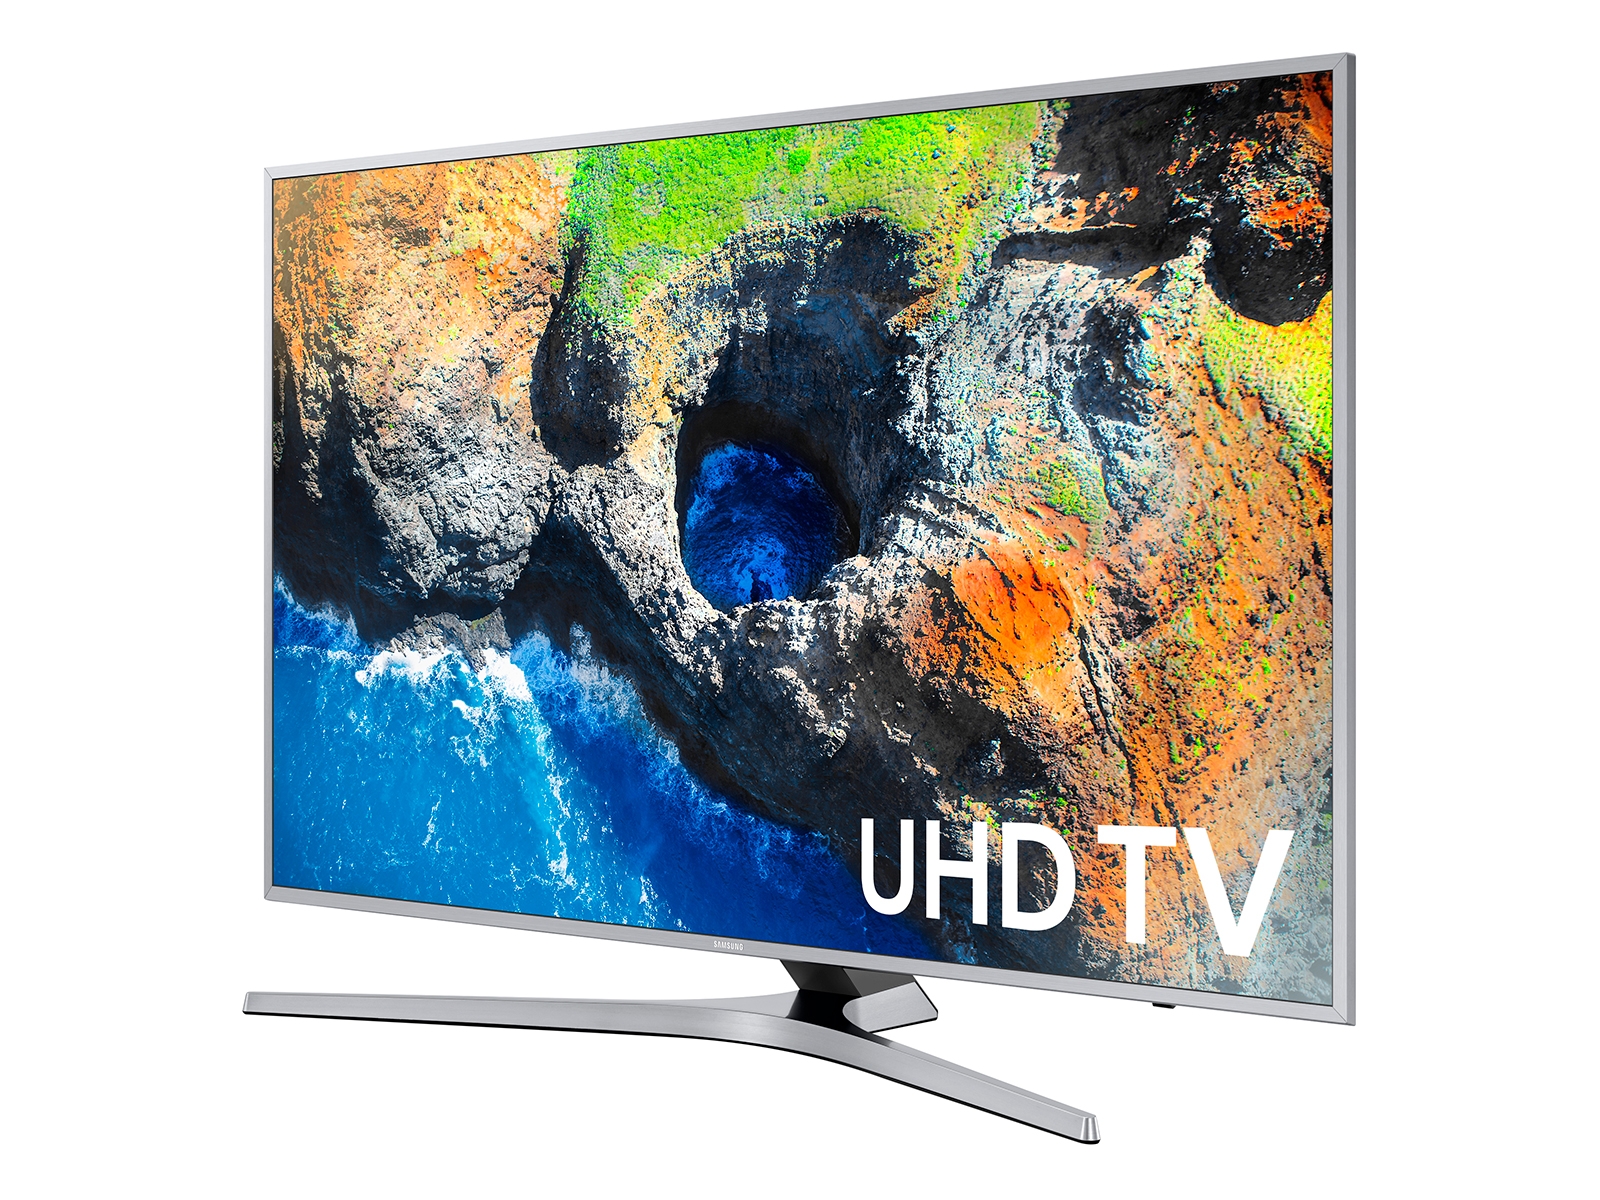 Thumbnail image of 49” Class MU7000 4K UHD TV